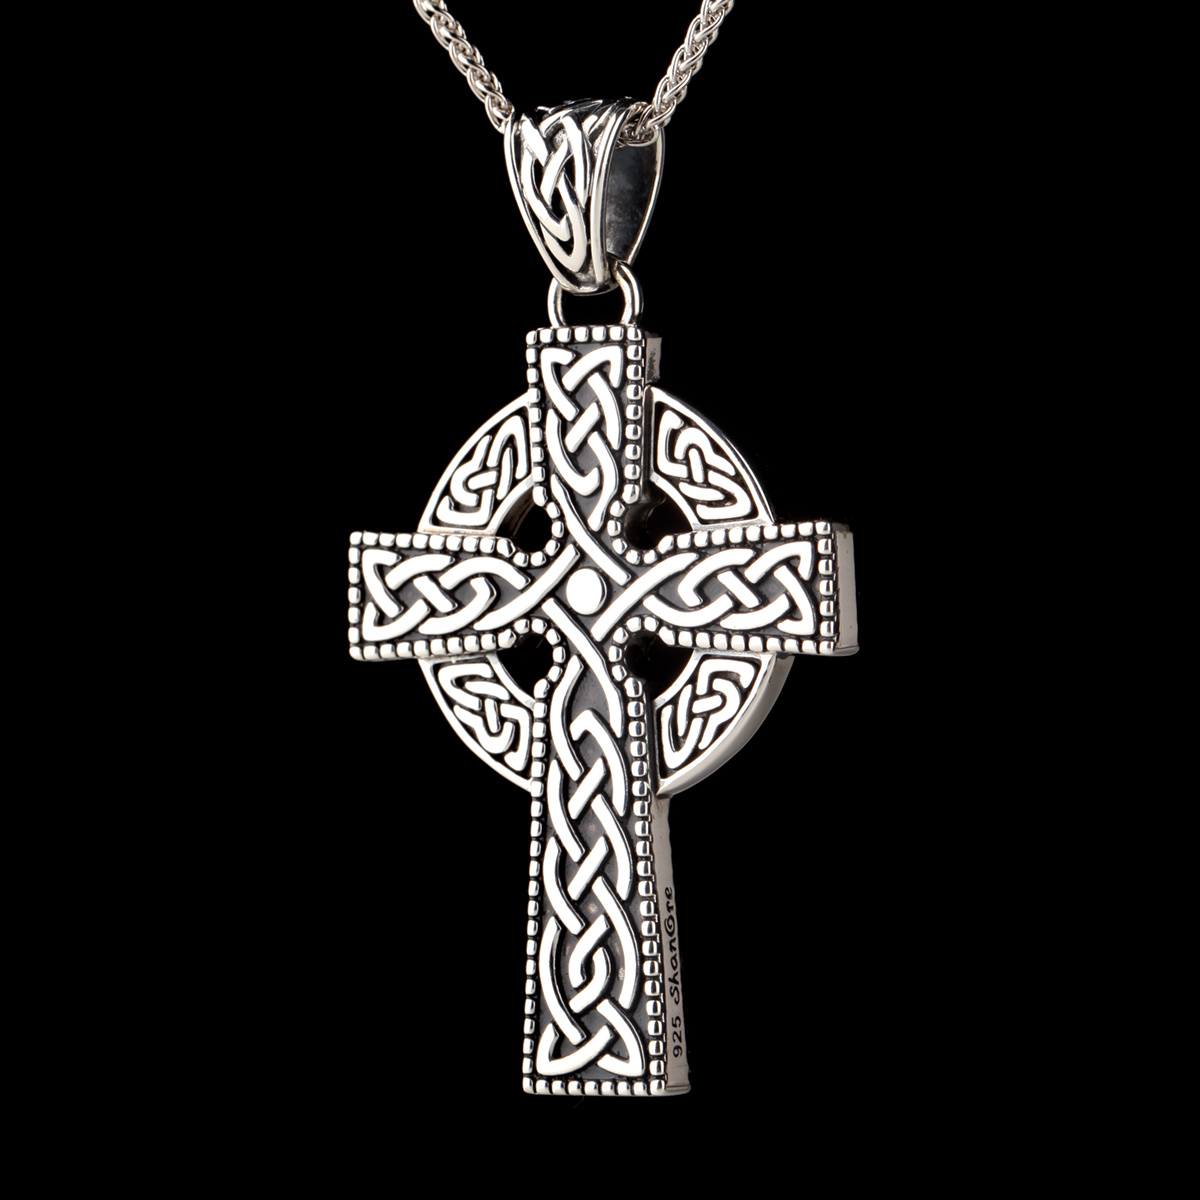 Great Celtic Cross - großes keltisches Kreuz aus Sterling Silber - handgefertigt in Irland